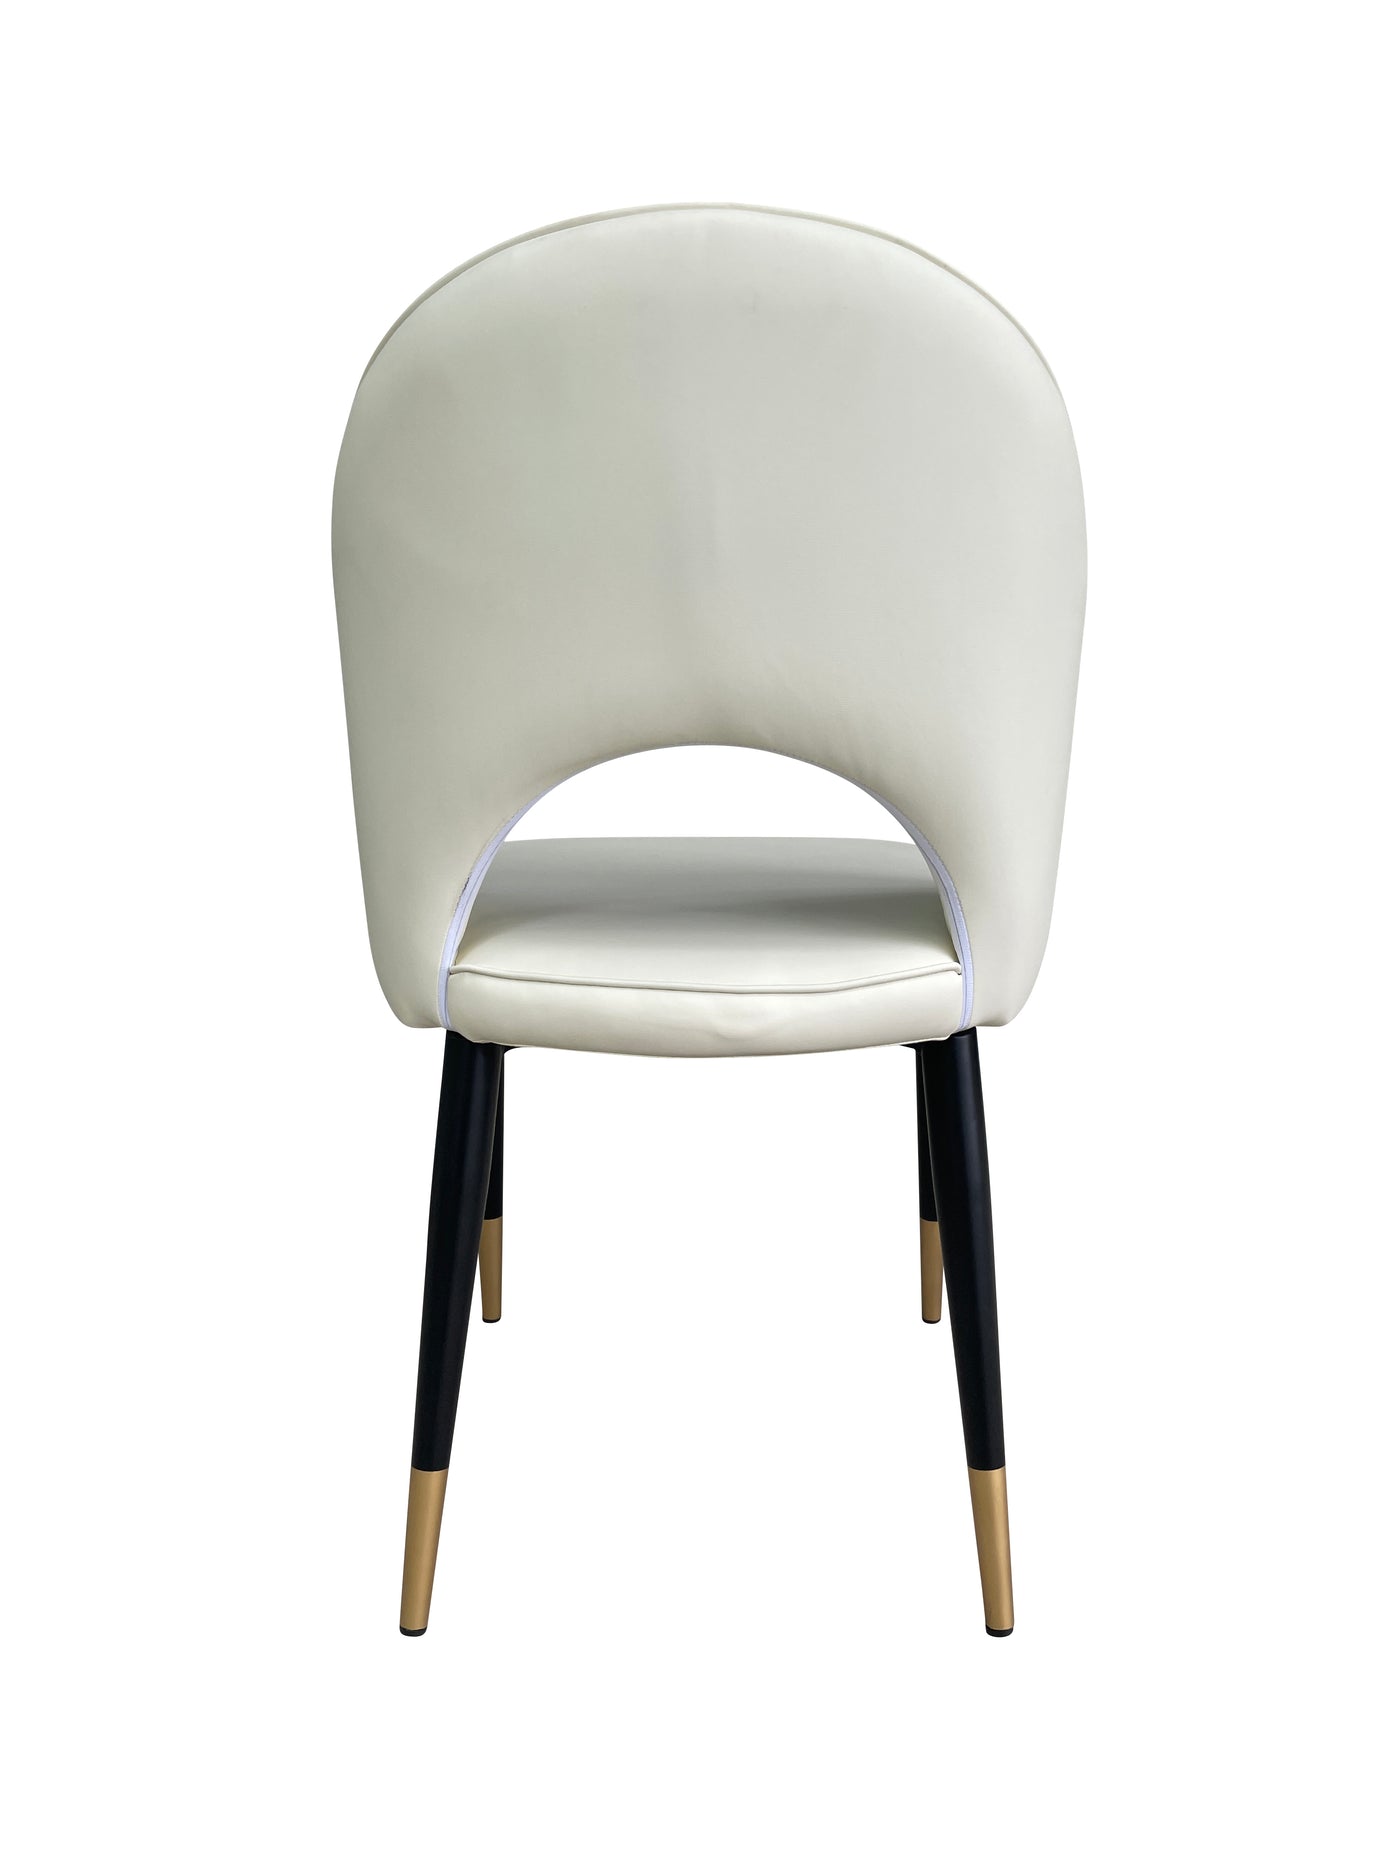 Bourdain Dining Chair Cream Leather Look